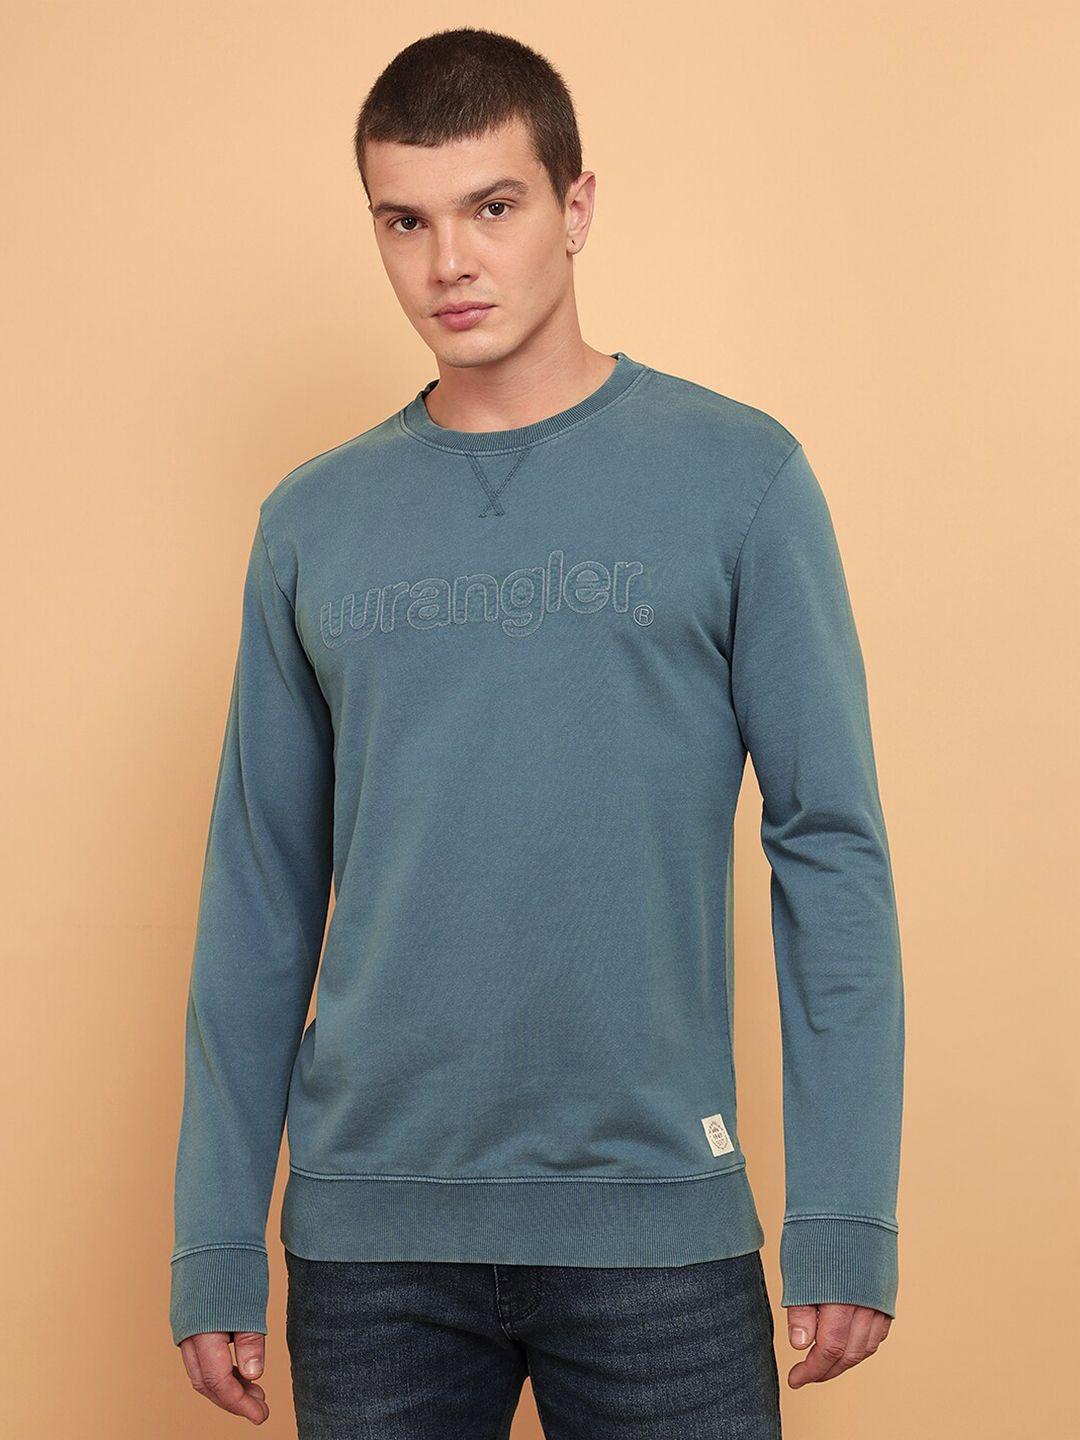 wrangler-typography-printed-long-sleeves-terry-pullover-sweatshirt